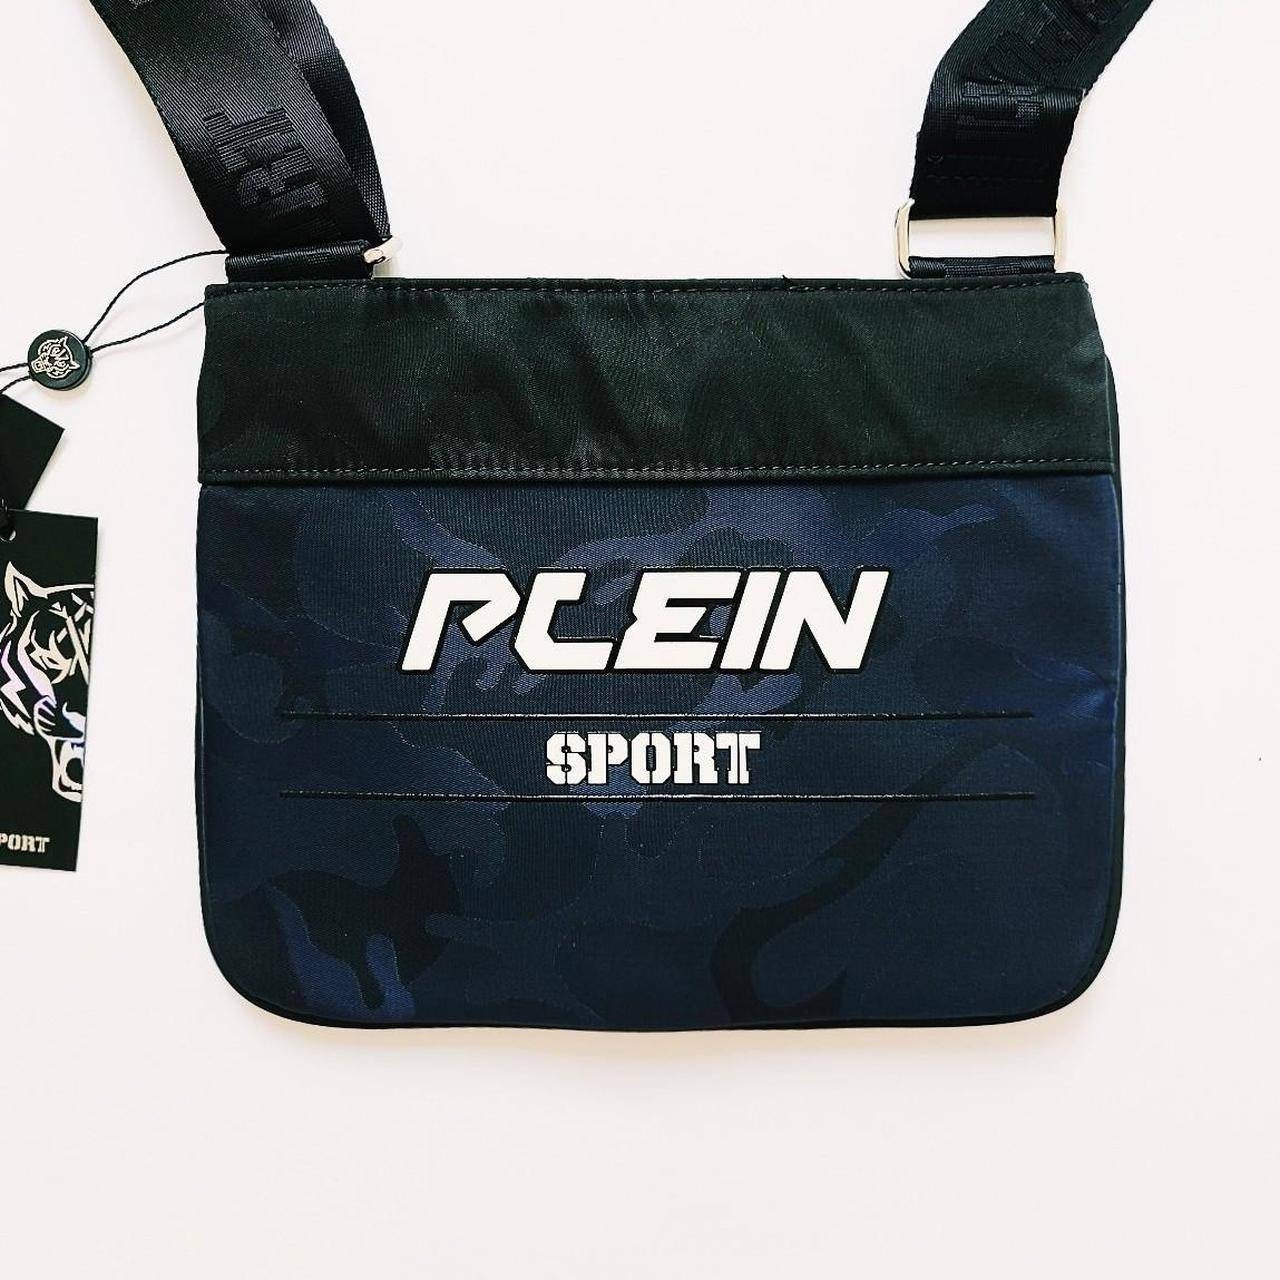 Luxury handbag - Philipp Plein navy blue quilted leather handbag